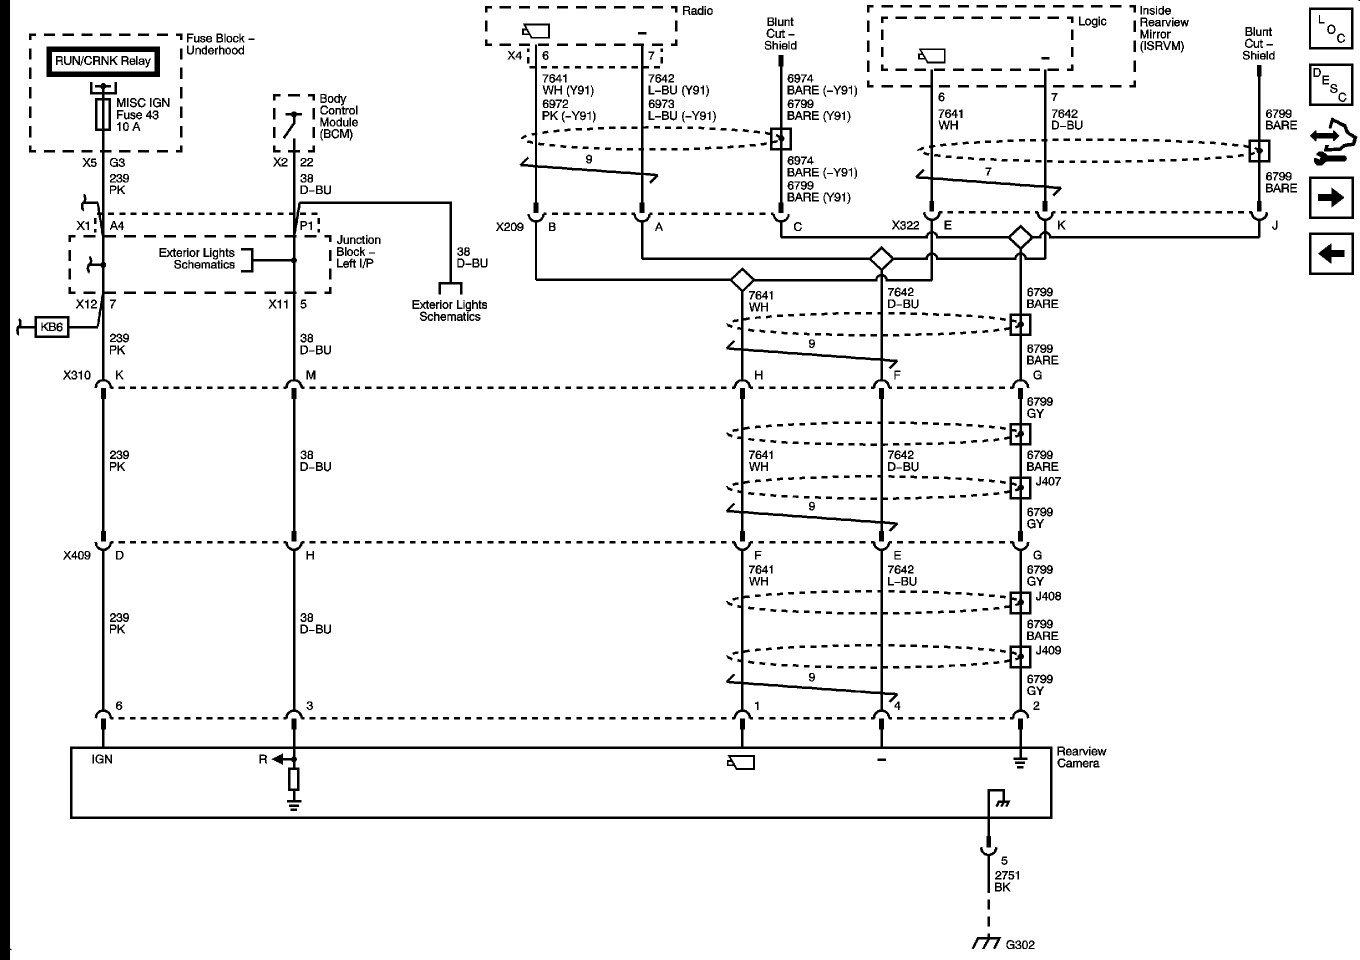 gentex-177 wiring diagram